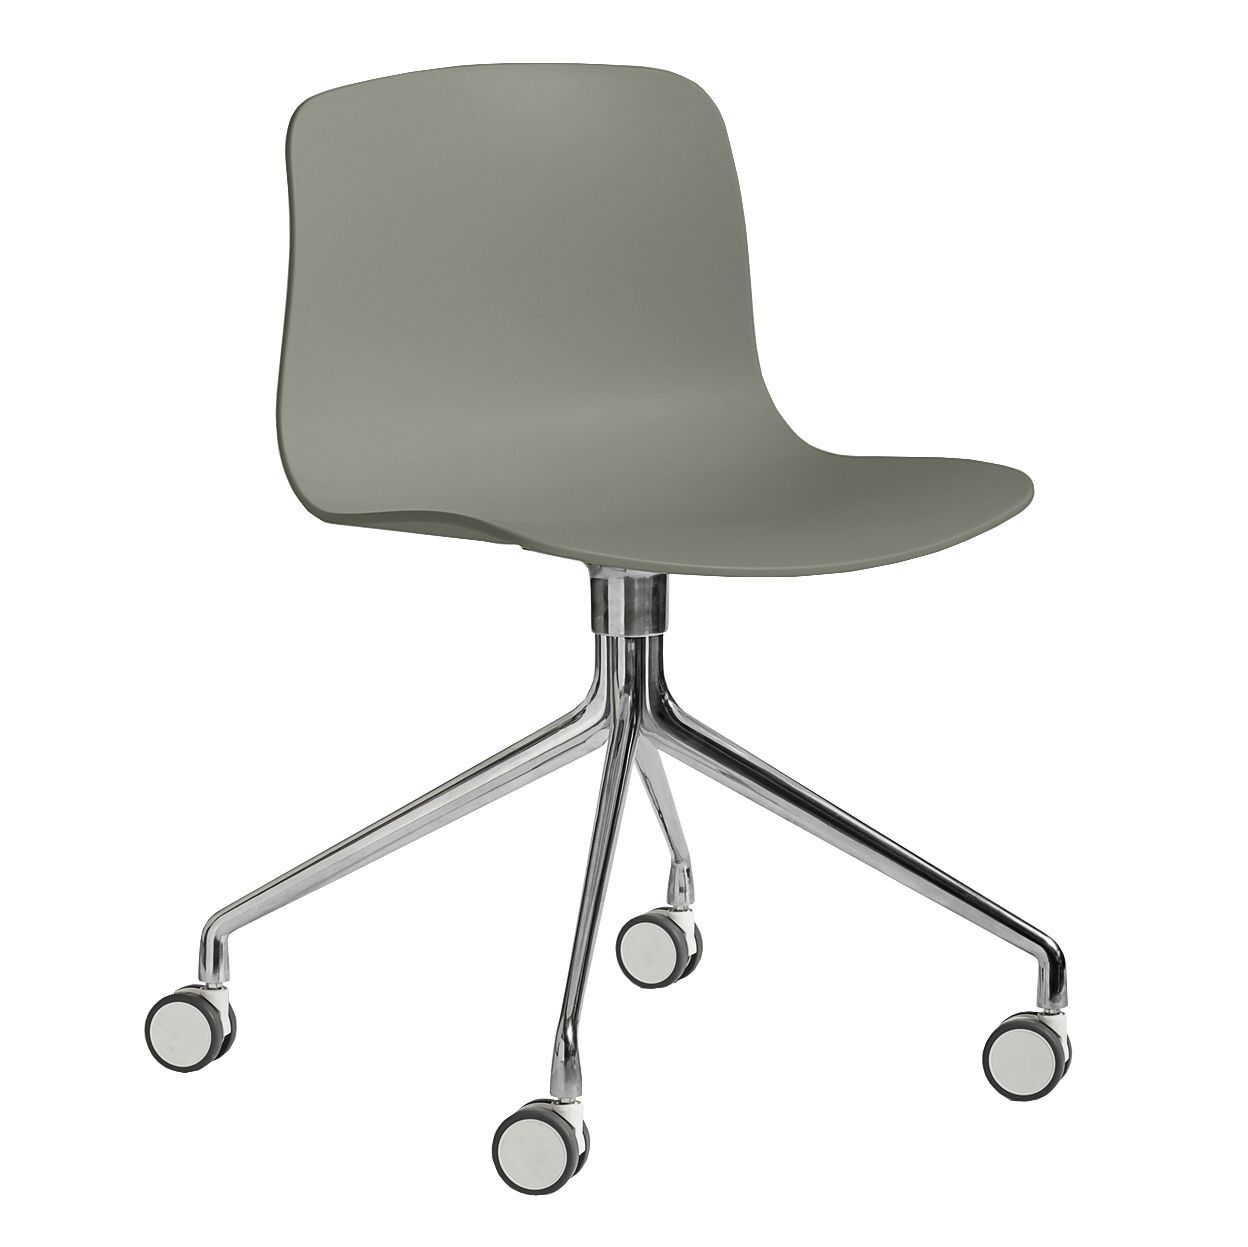 Hay About a Chair AAC14 stoel met gepolijst aluminium onderstel Dusty Green